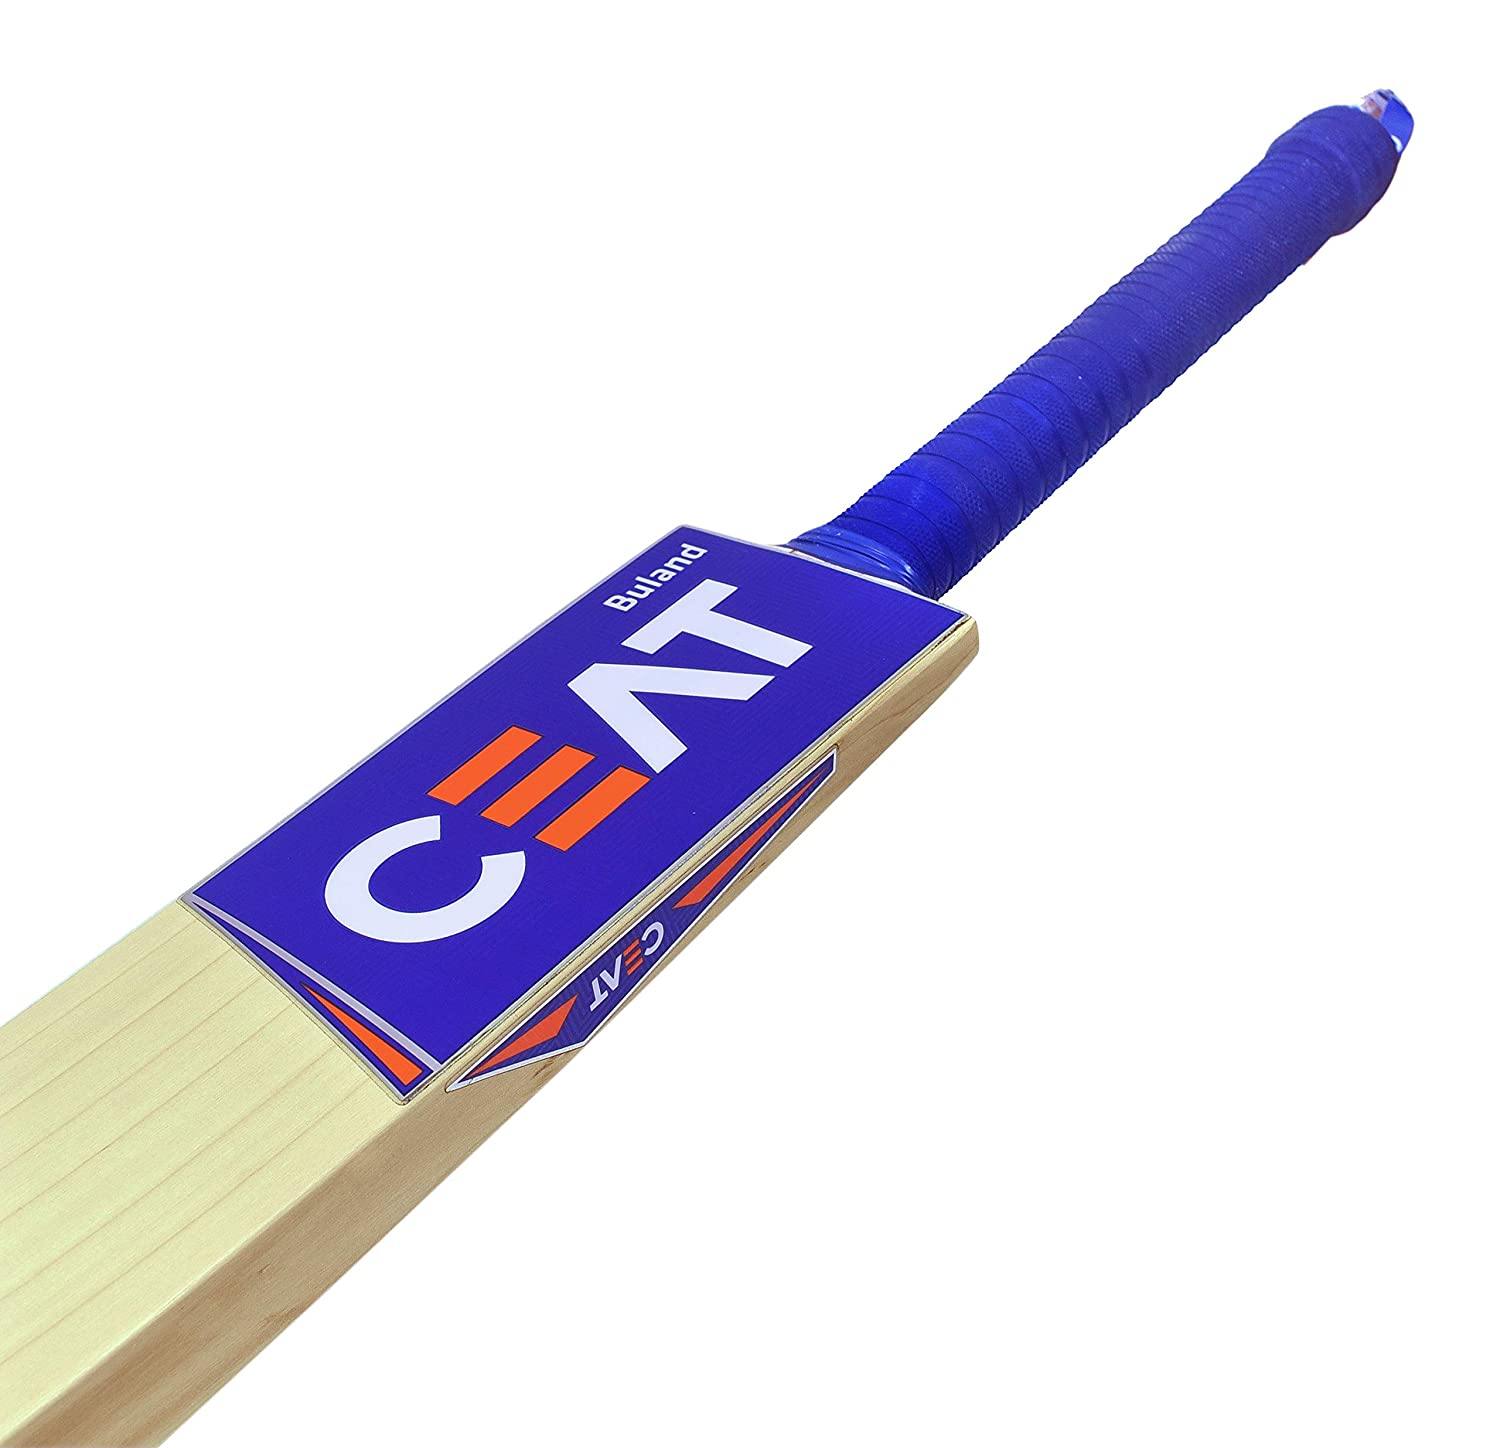 CEAT Buland English Willow Cricket Bat - Best Price online Prokicksports.com